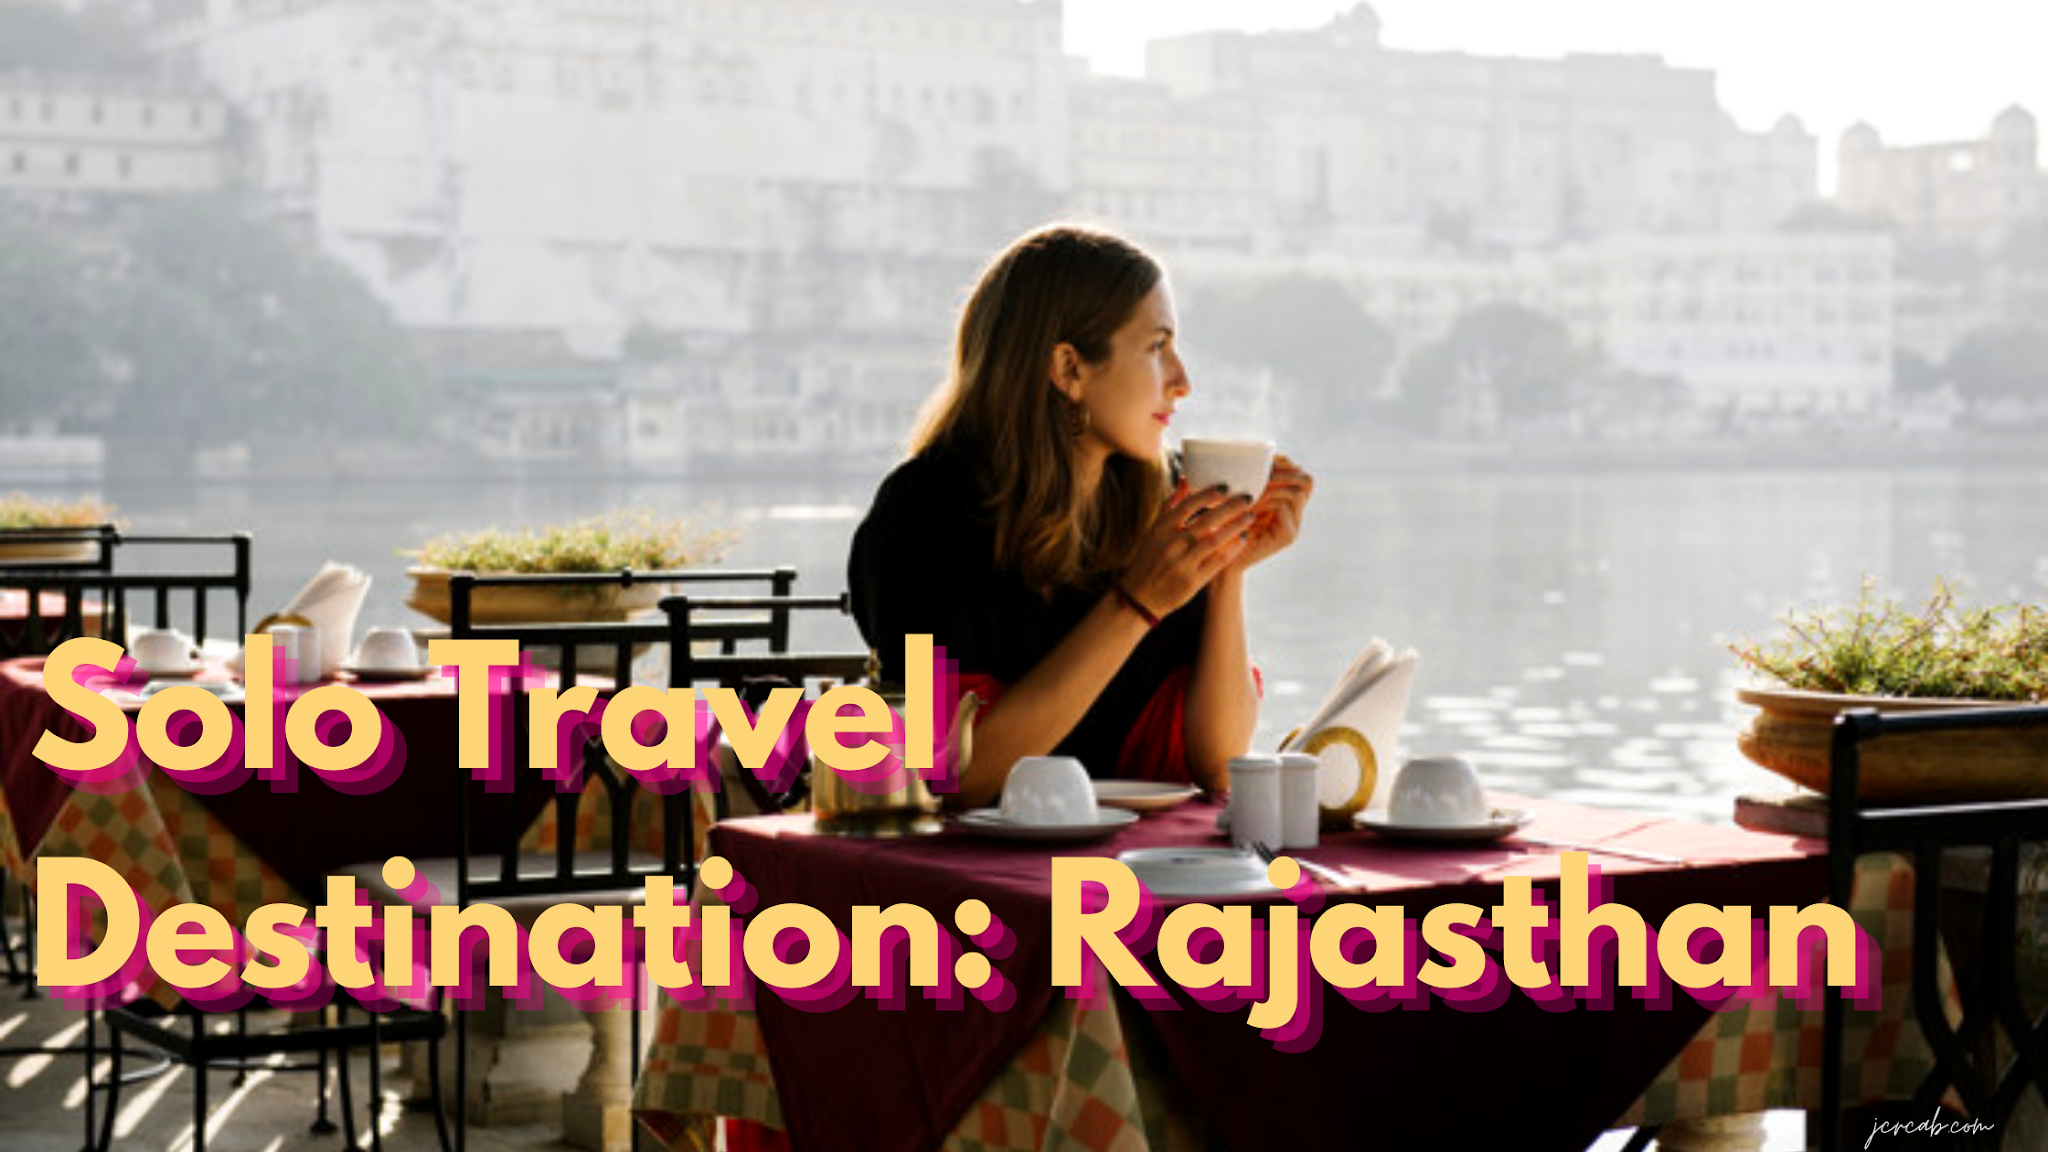 Solo Travel Destination: Rajasthan